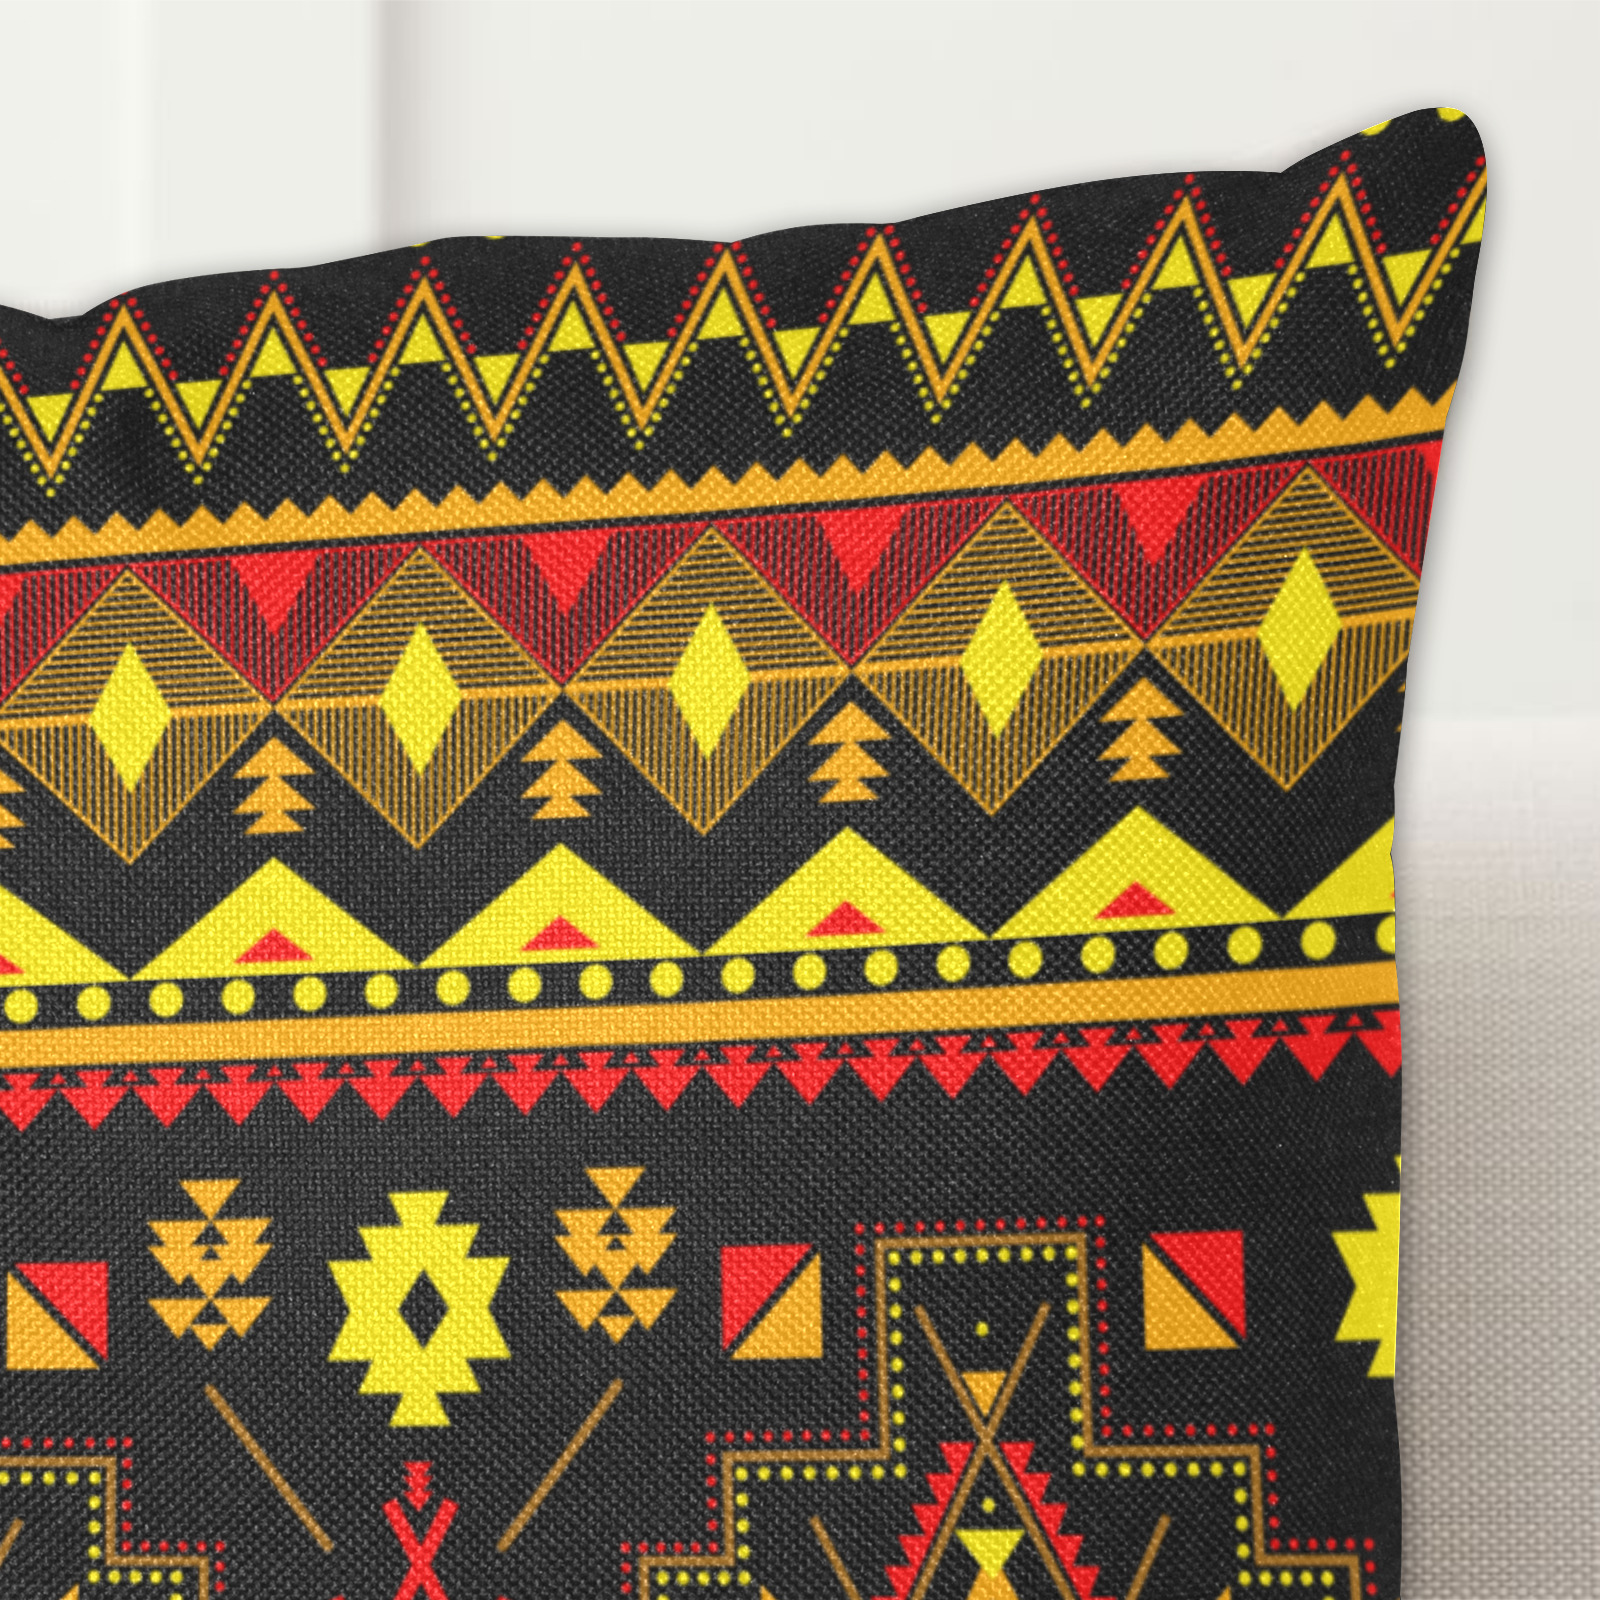 Aboriine Ethnic Pattern Linen Zippered Pillowcase 18"x18"(Two Sides)